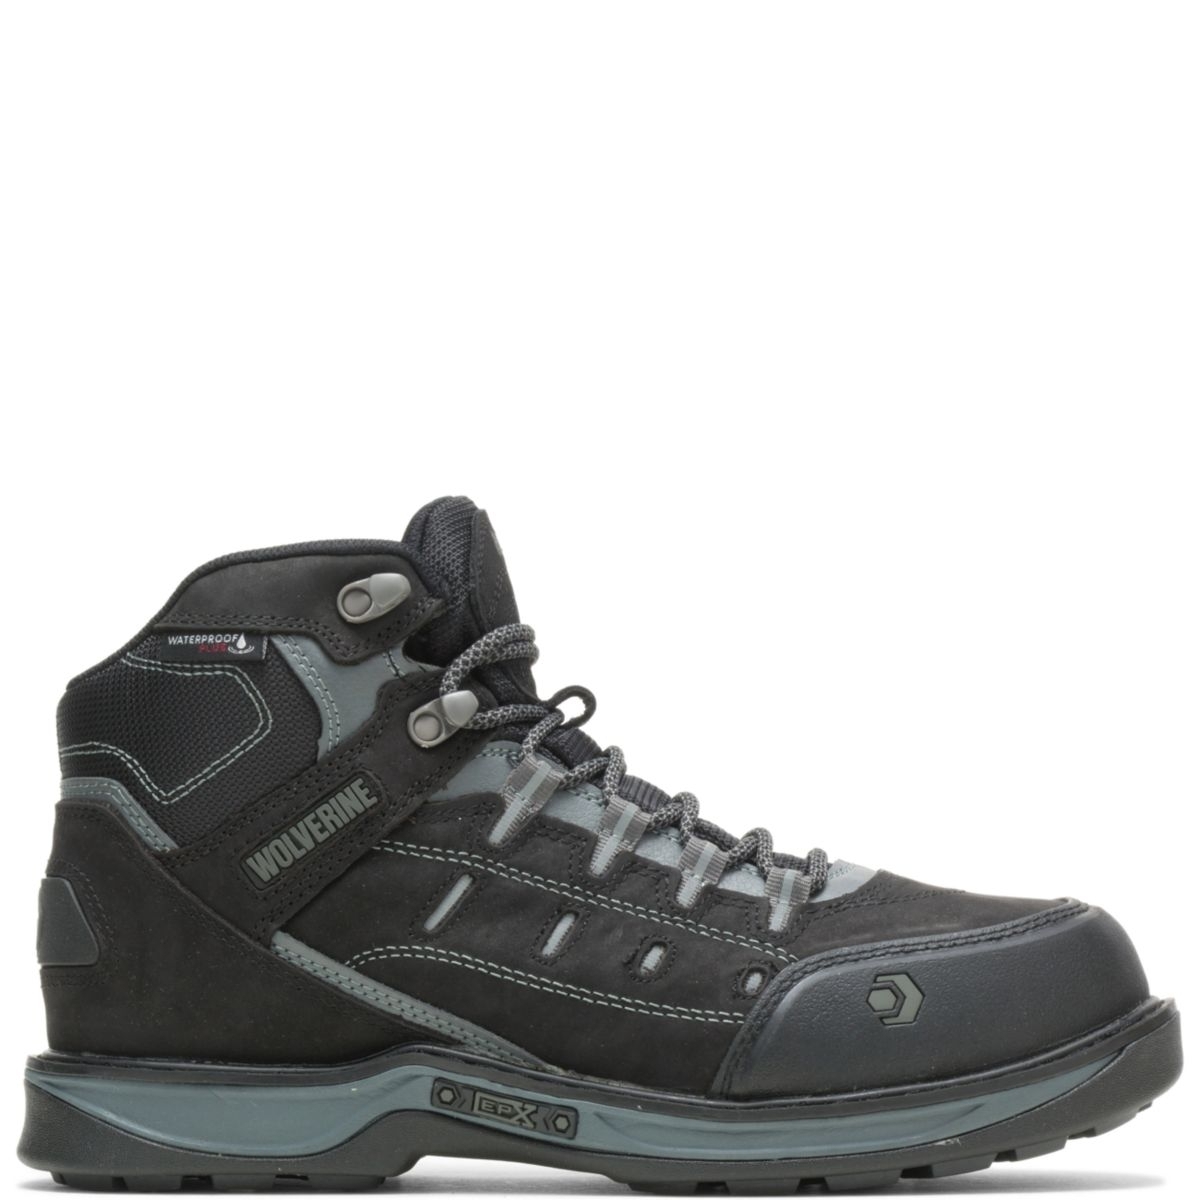 WOLVERINE Men's Edge LX Waterproof CarbonMAXÂ® Composite Toe Work Boot Black/Grey - W10553 BLACK/GREY - BLACK/GREY, 10.5 X-Wide